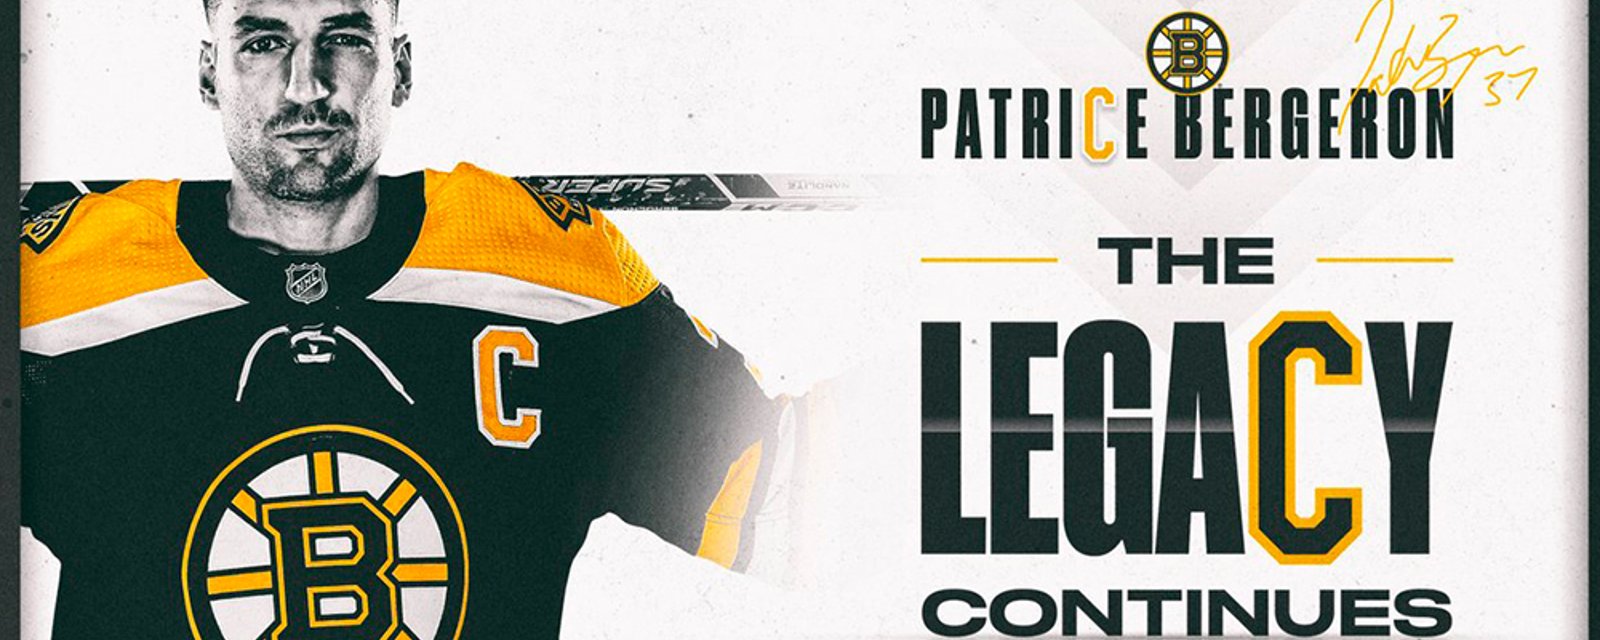 Bruins officially name Patrice Bergeron as the team's next captain